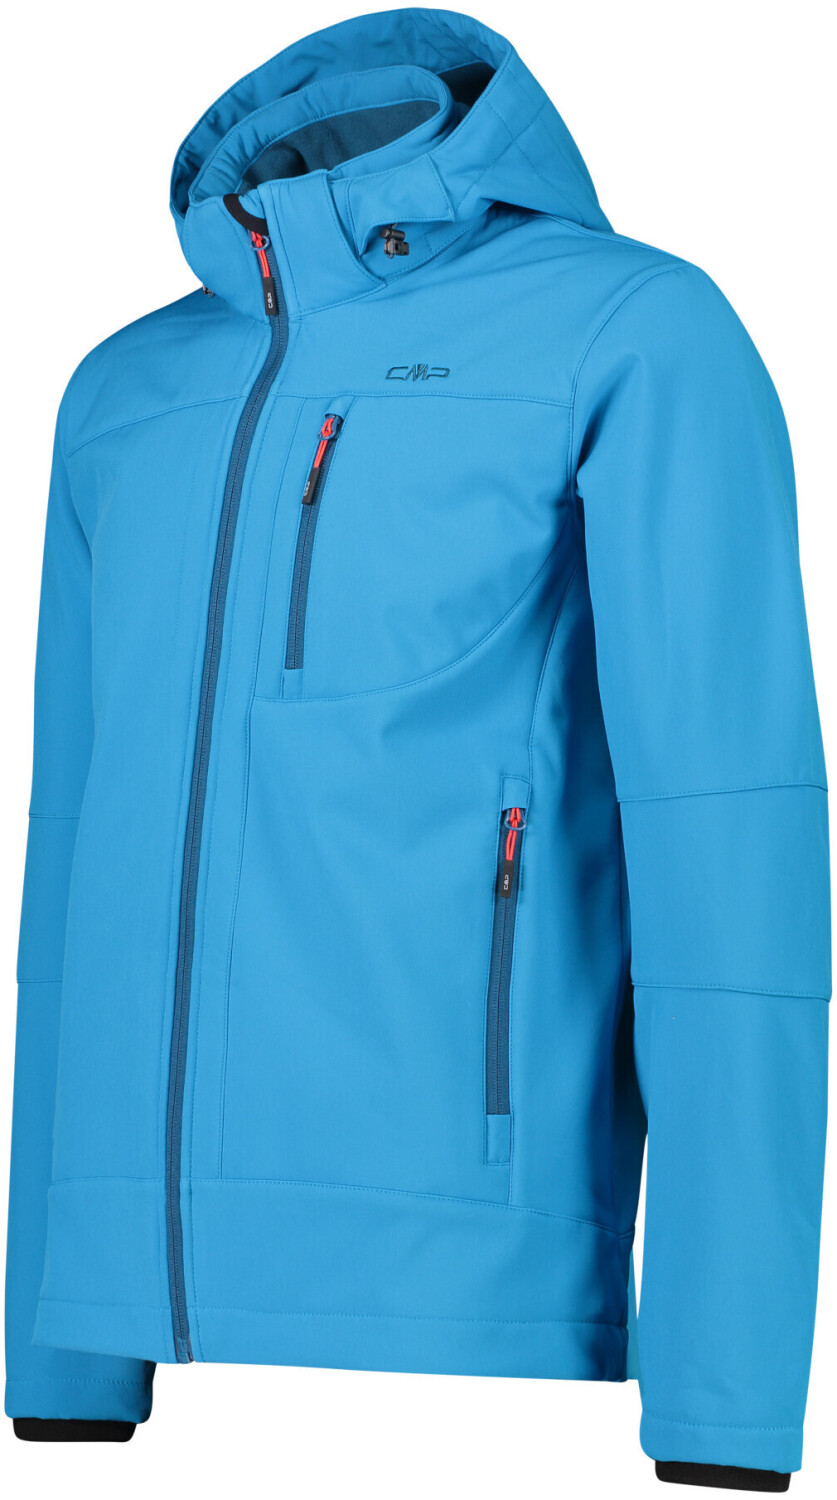 CMP Man Softshell Jacket Preisvergleich | bei Hood With Detachable € (3A01787N) 53,91 ab danube